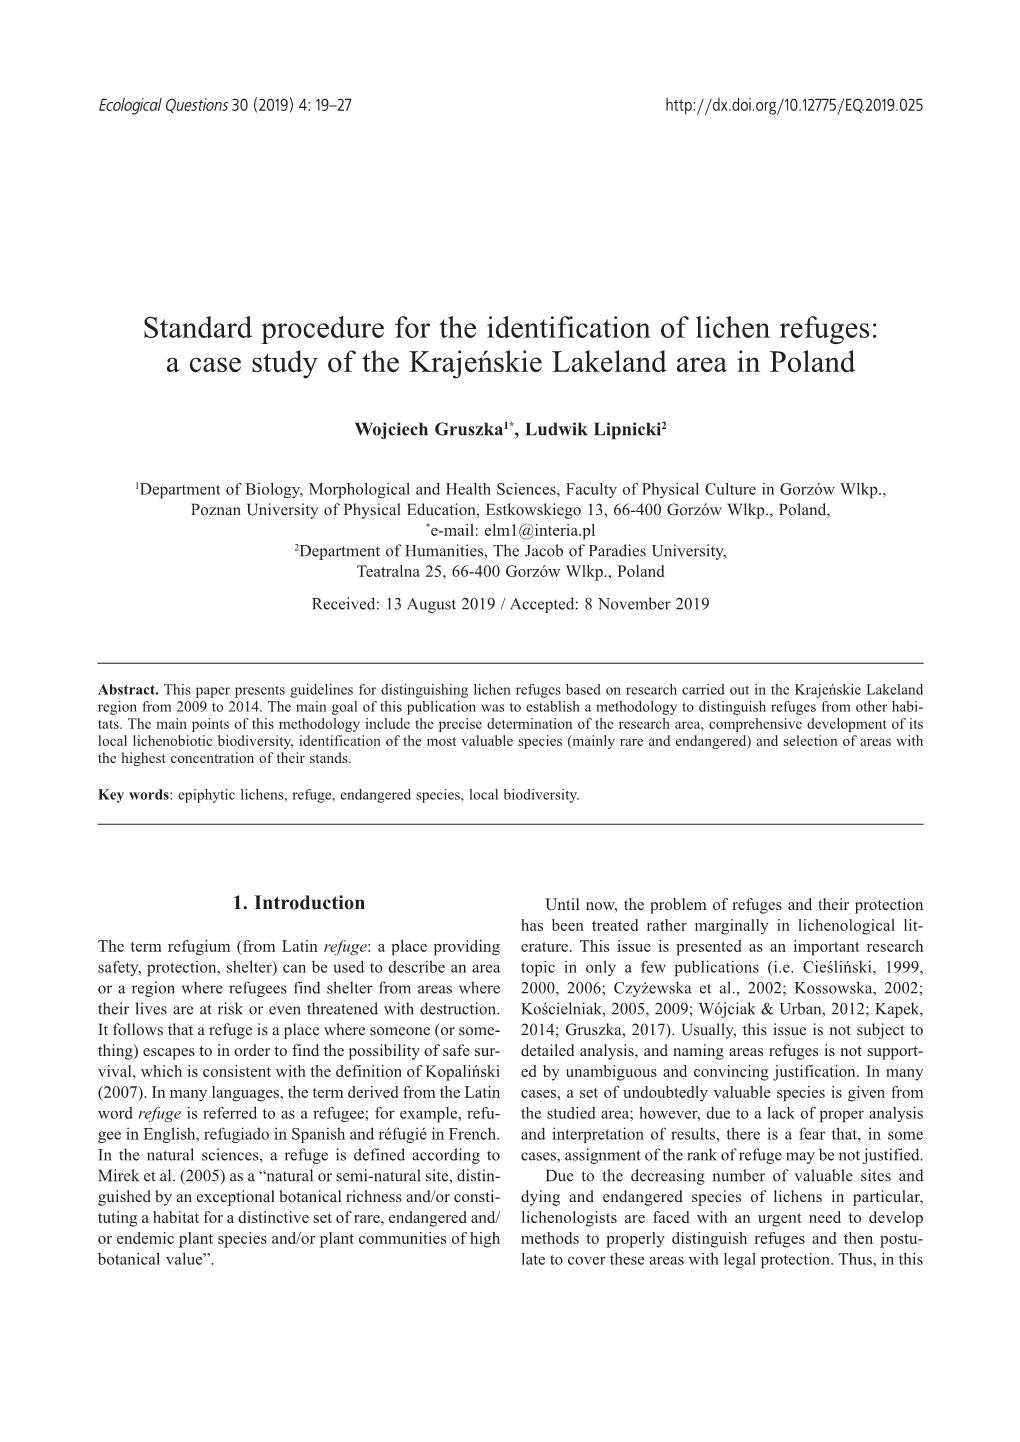 Standard Procedure for the Identification of Lichen Refuges: a Case Study of the Krajeńskie Lakeland Area in Poland 21